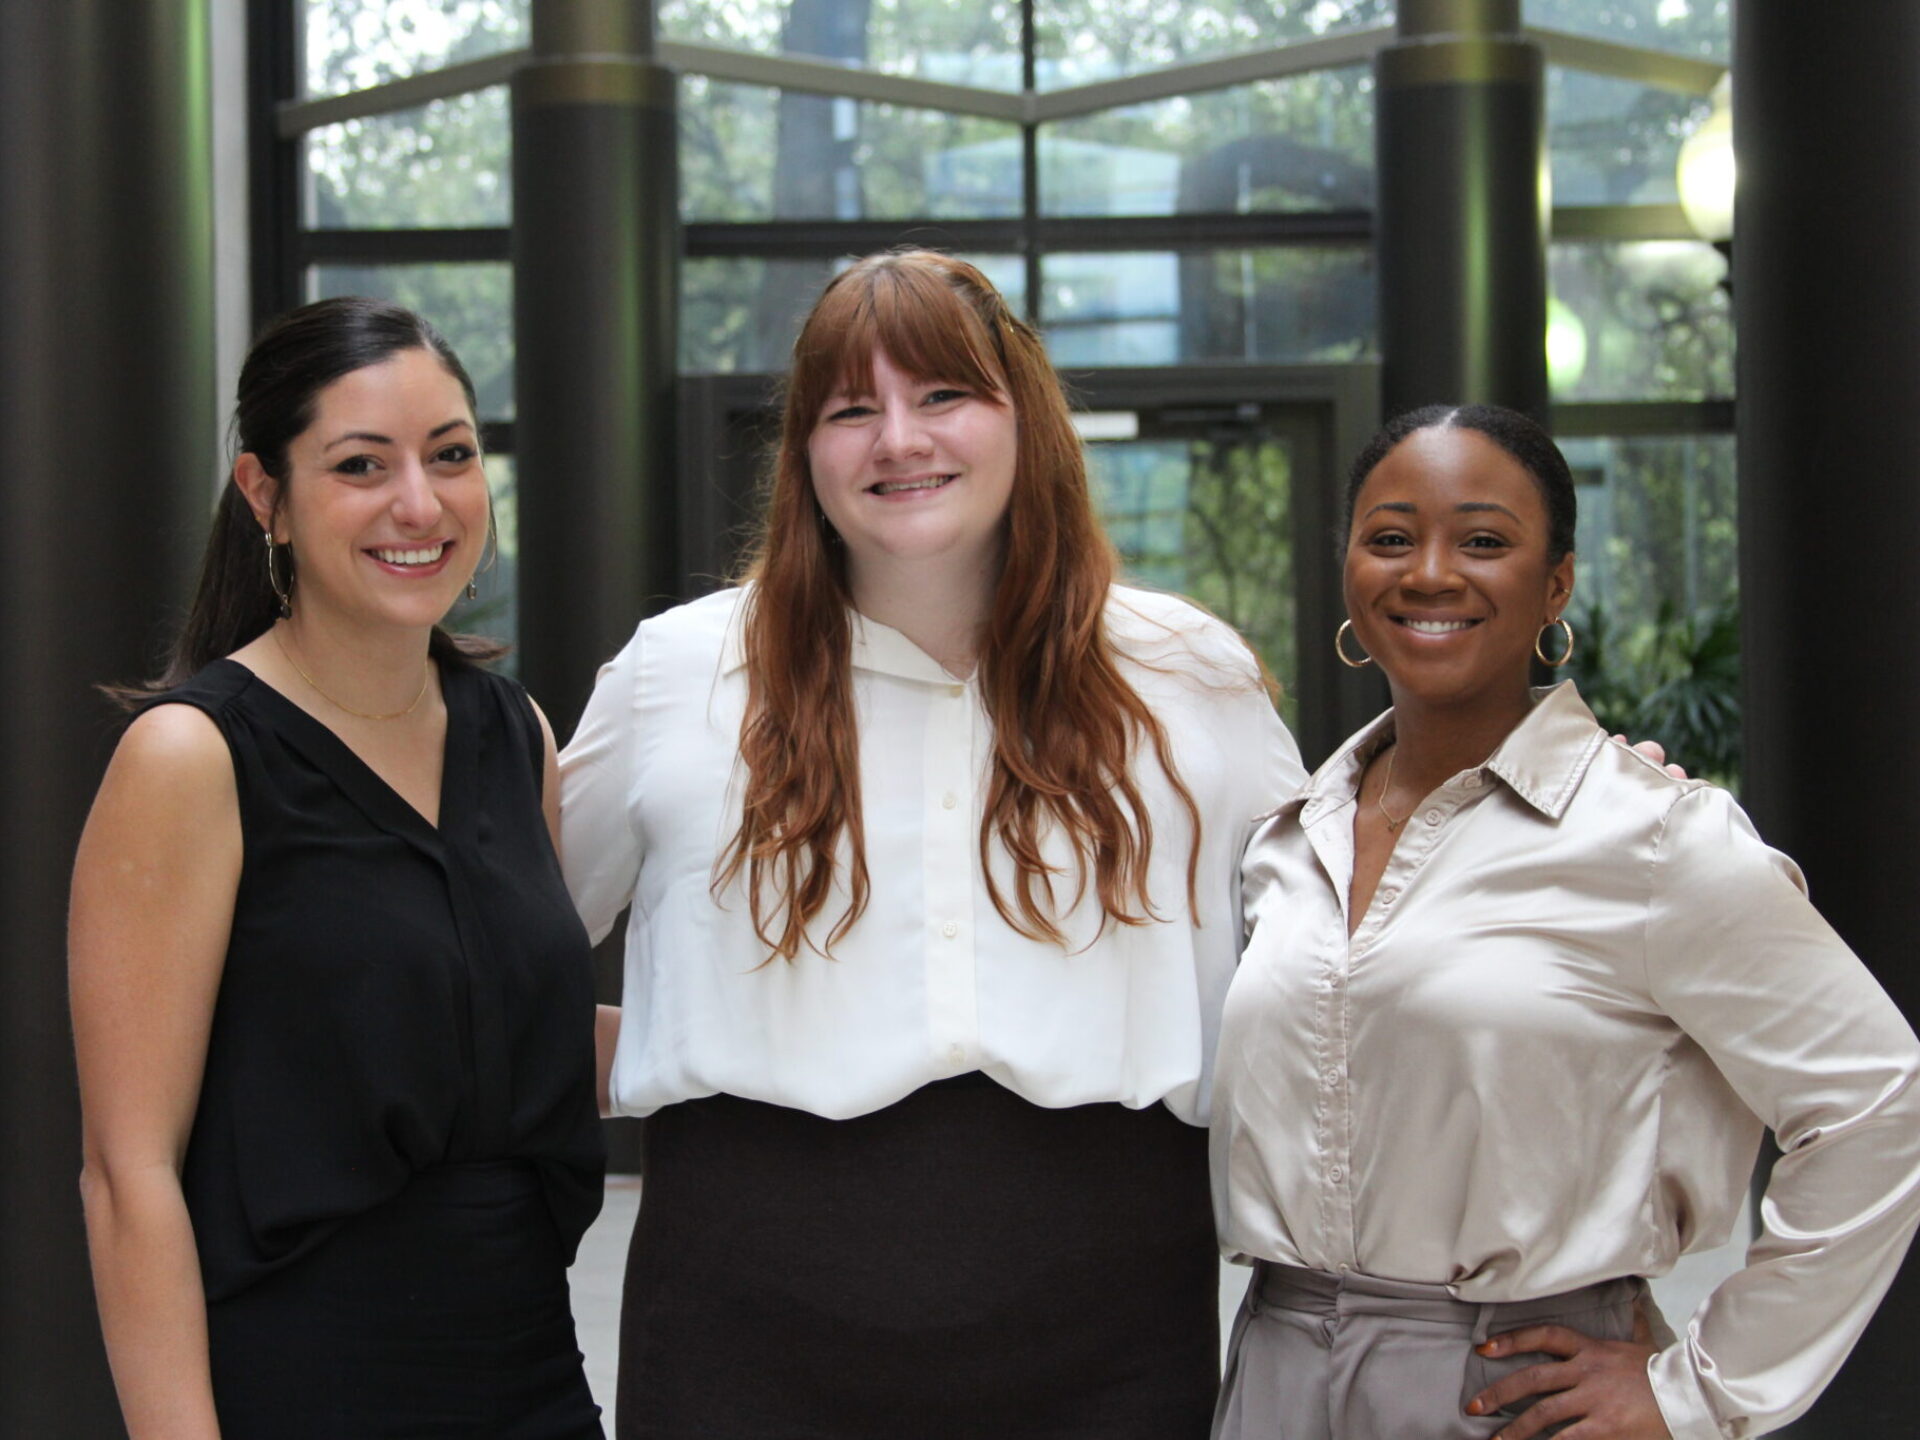 Class of 2023 Justice Center Graduating Student Award winners Lea Kokenes, Grace Thomas, and Alyse Munrose.